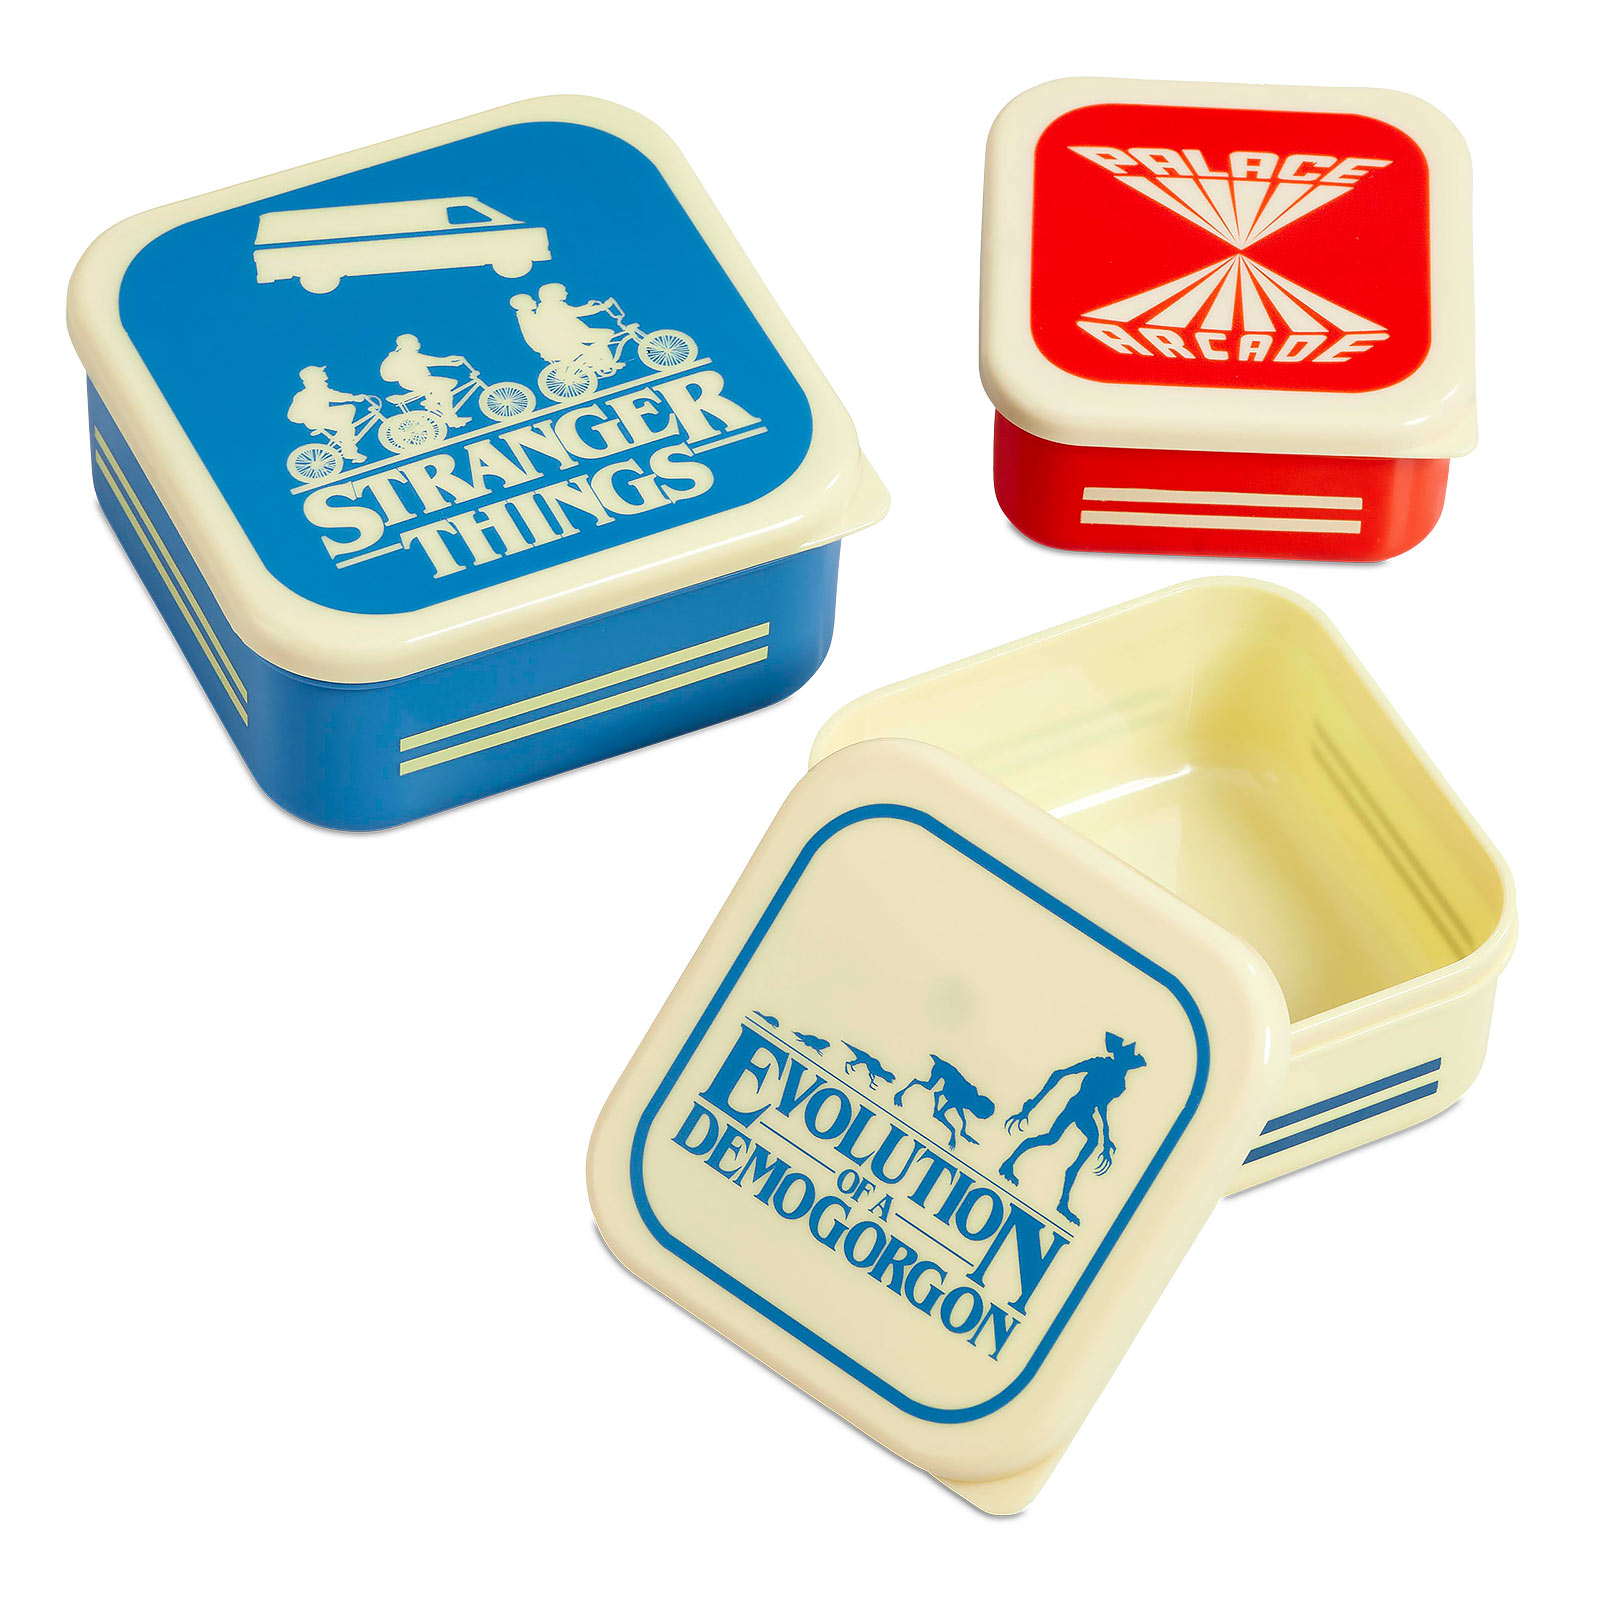 Stranger Things - Silhouettes Retro Lunchbox Set of 3